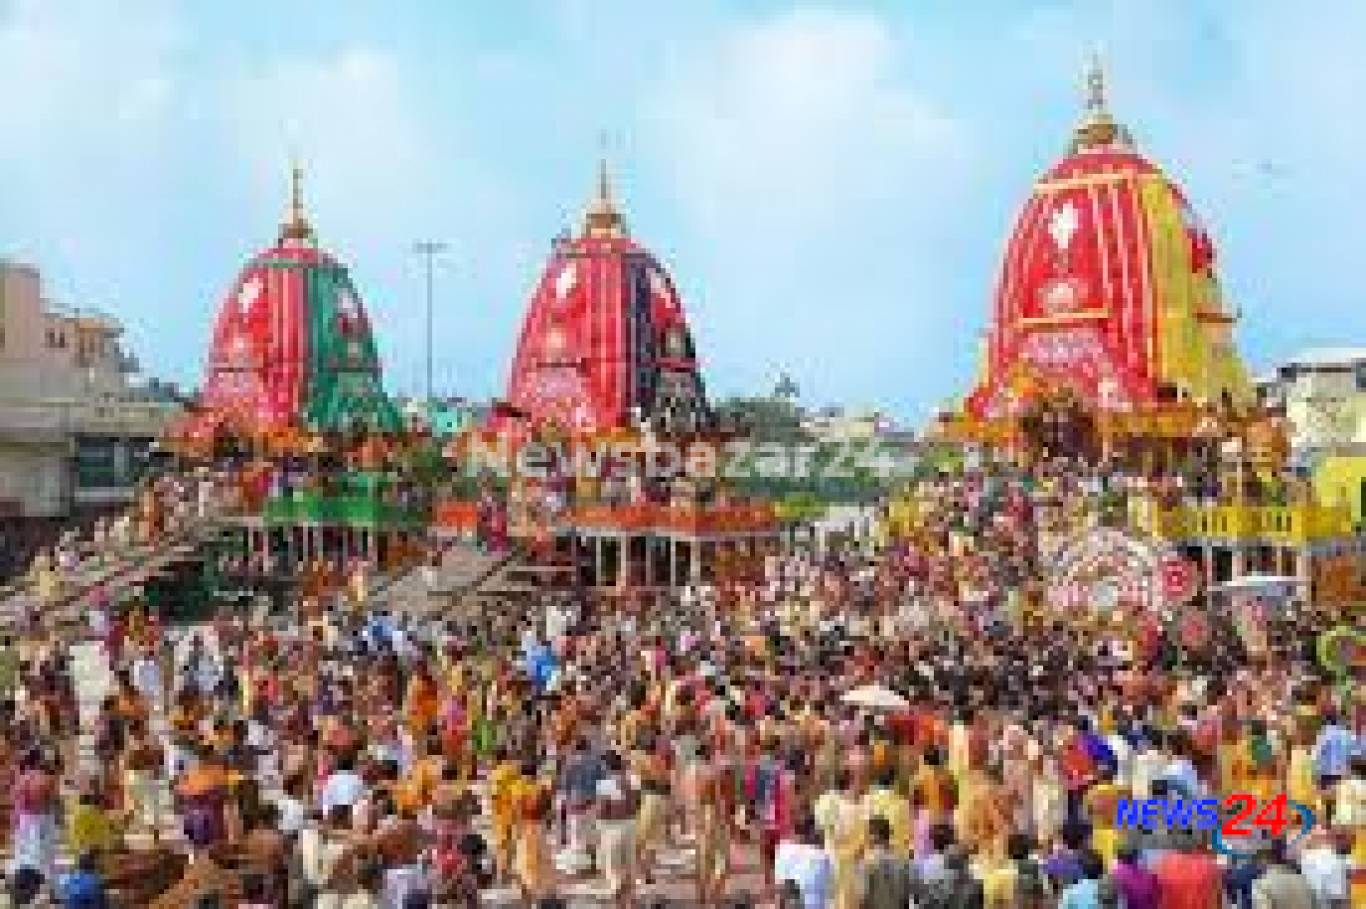 Rath jatra 2022: জগন্নাথদেবের মন্দিরের অস্বাভাবিকতা এবং লোকবিশ্বাস